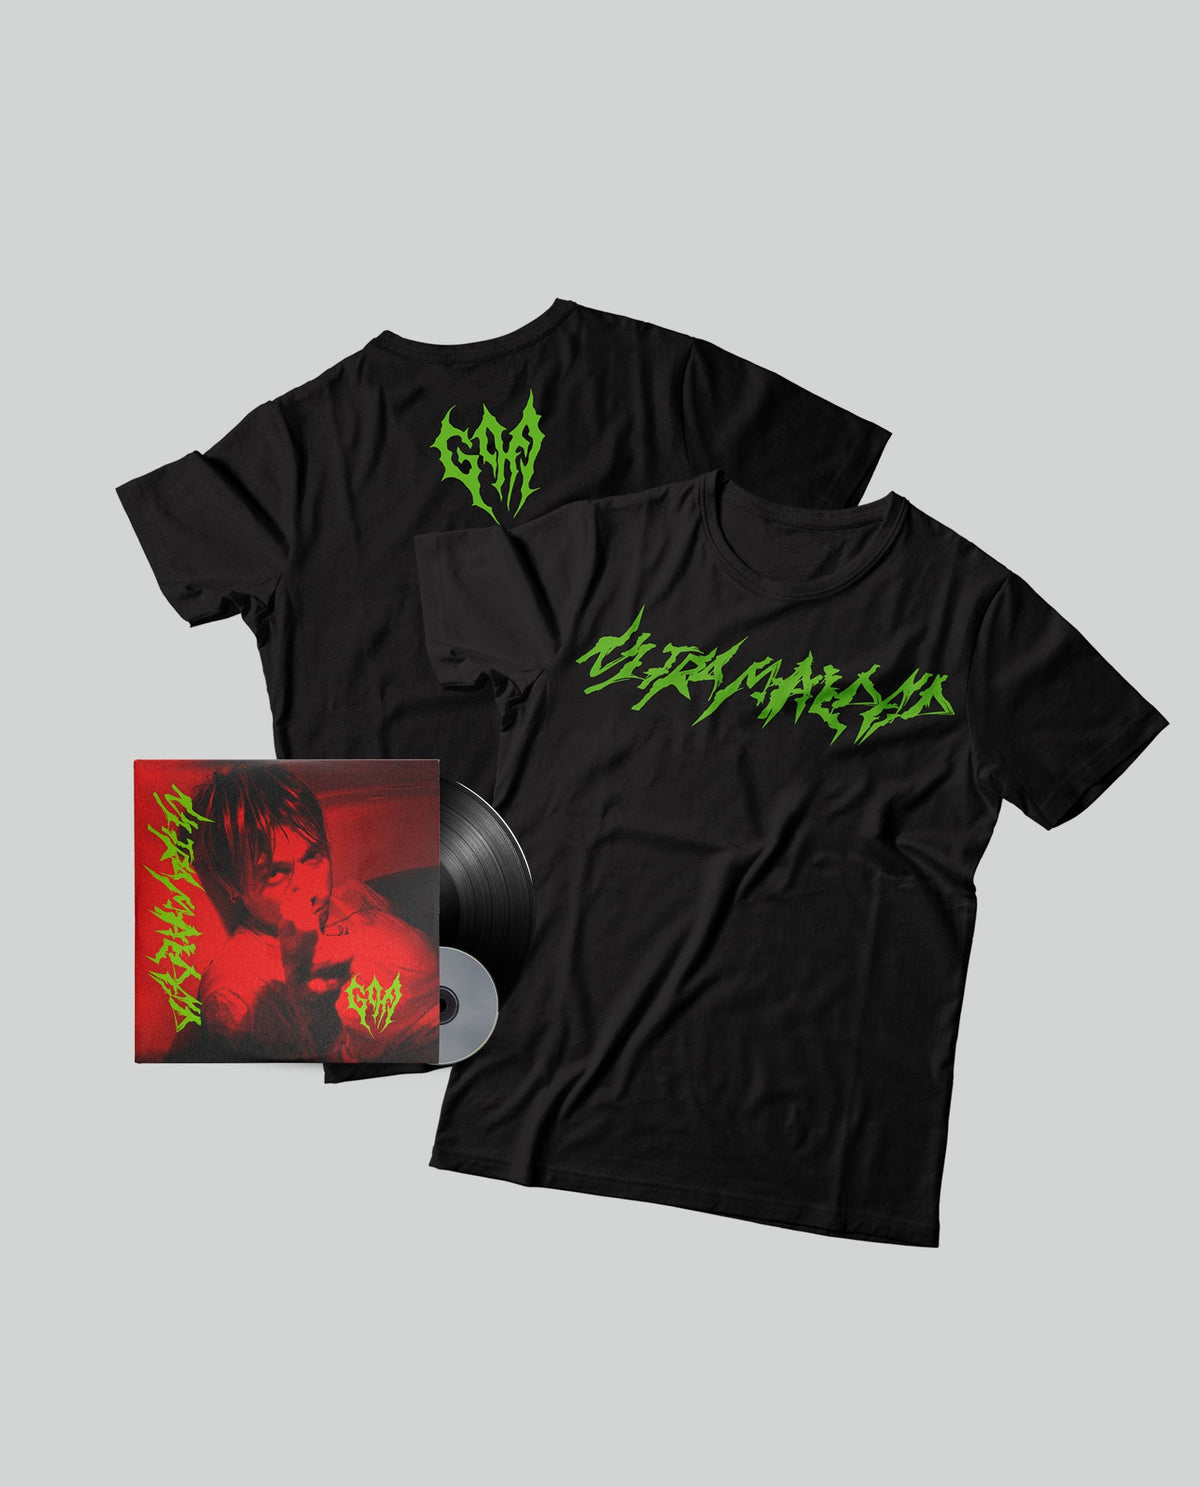 GOA - Pack LP + CD + Camiseta Ultramaldad - D2fy - Metales Preciosos